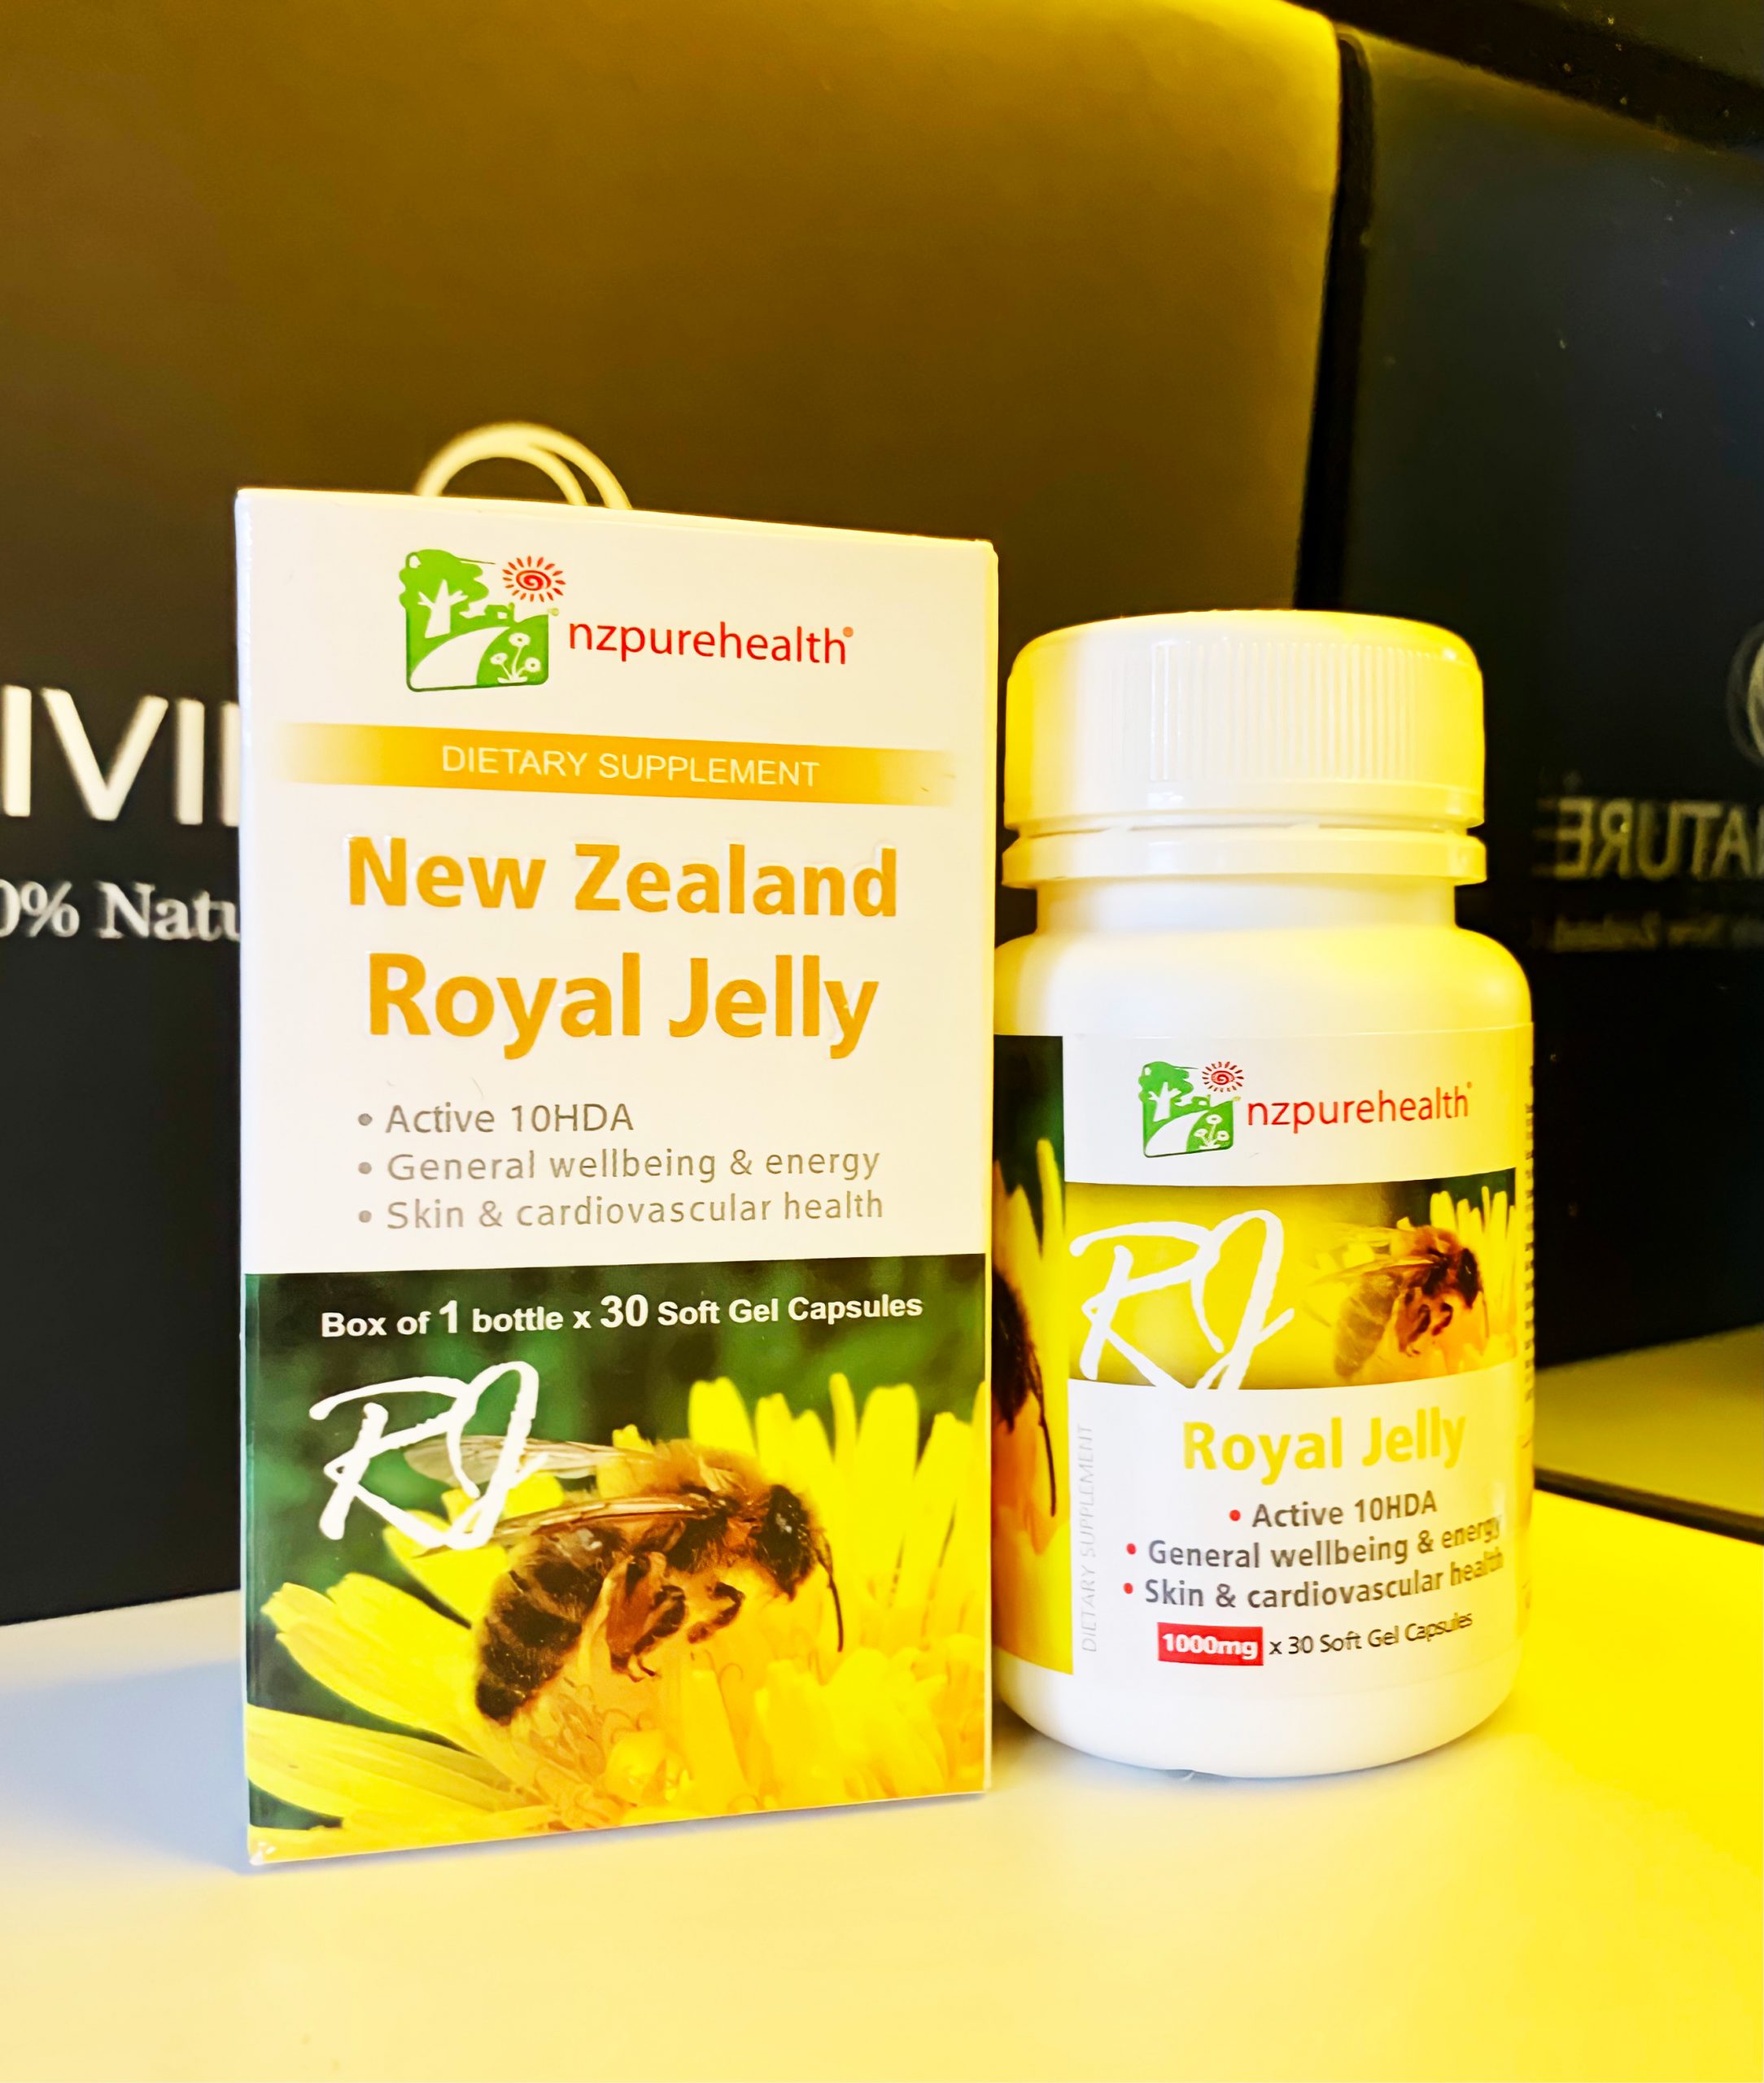 Sữa ong chúa New Zealand Royal Jelly